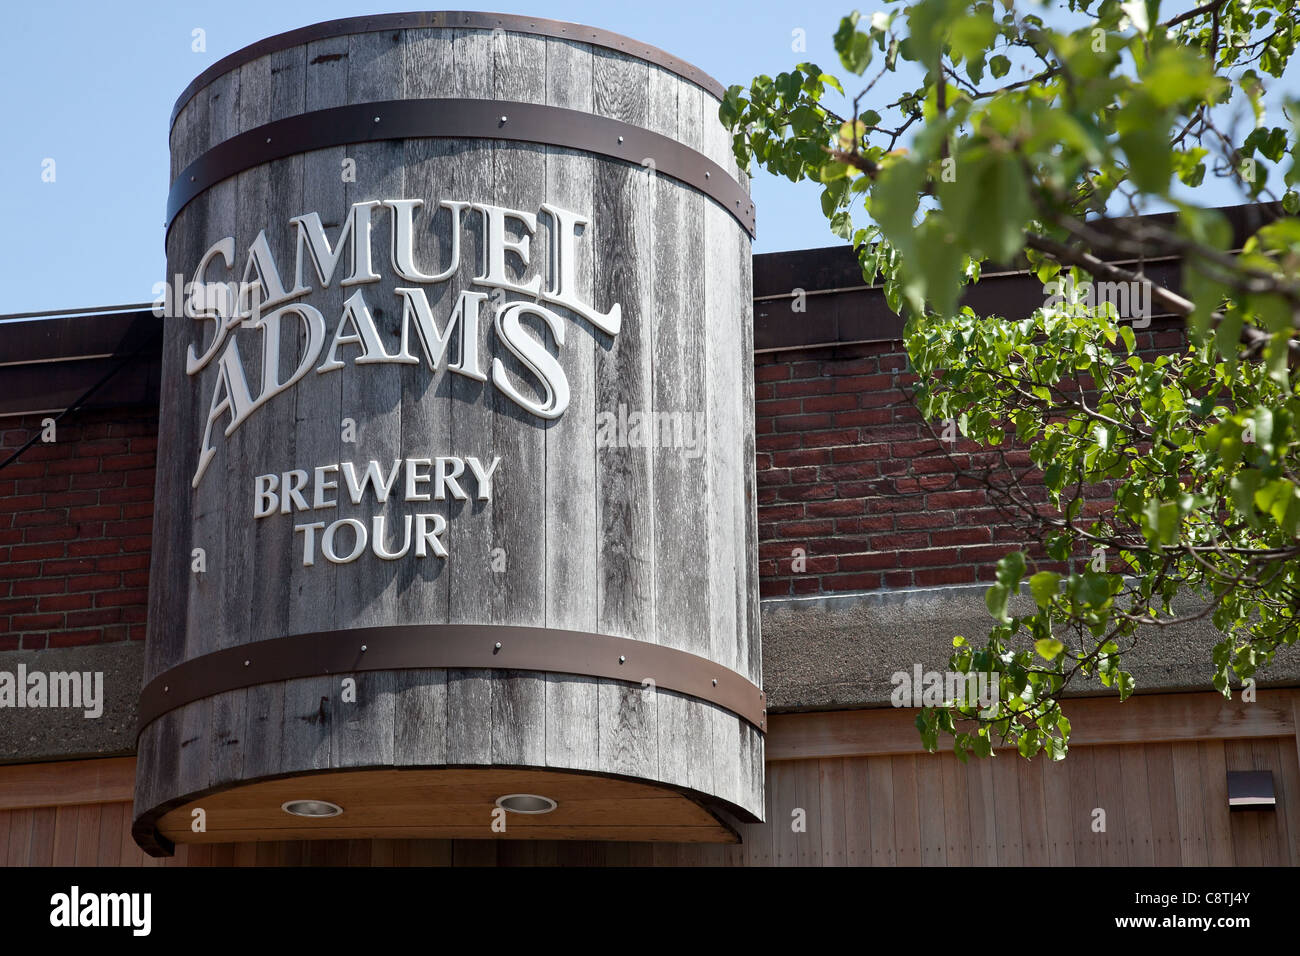 Samuel Adams Brewery Tour sign in Boston, Massachusetts Stock Photo